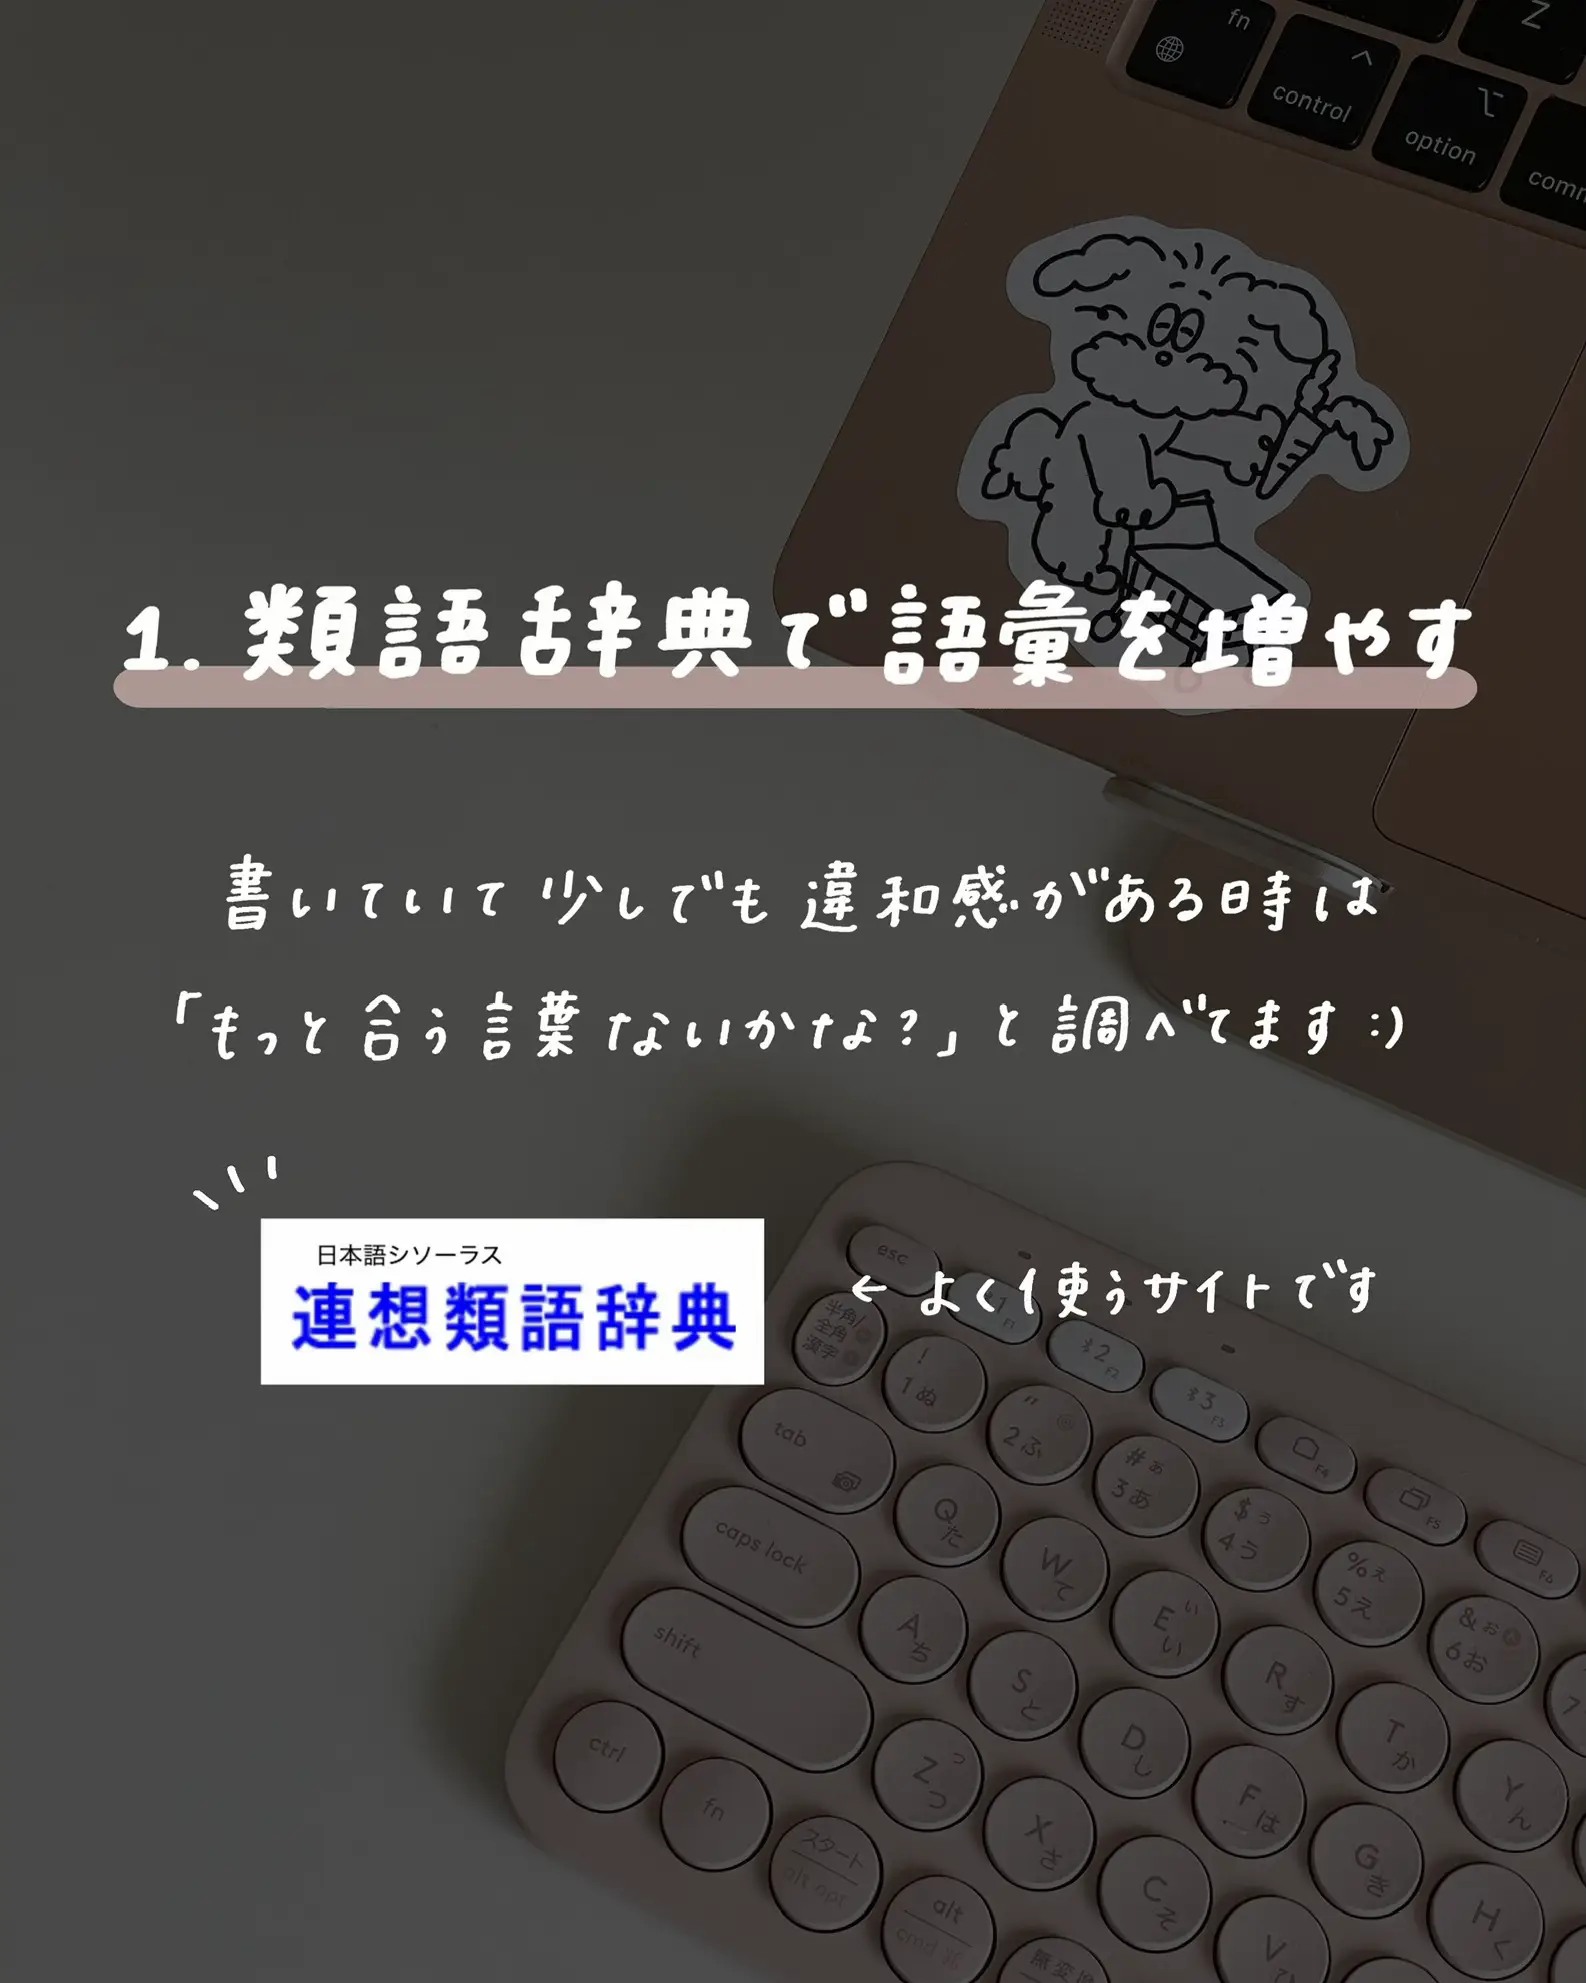 Journey of Writing - Lemon8検索